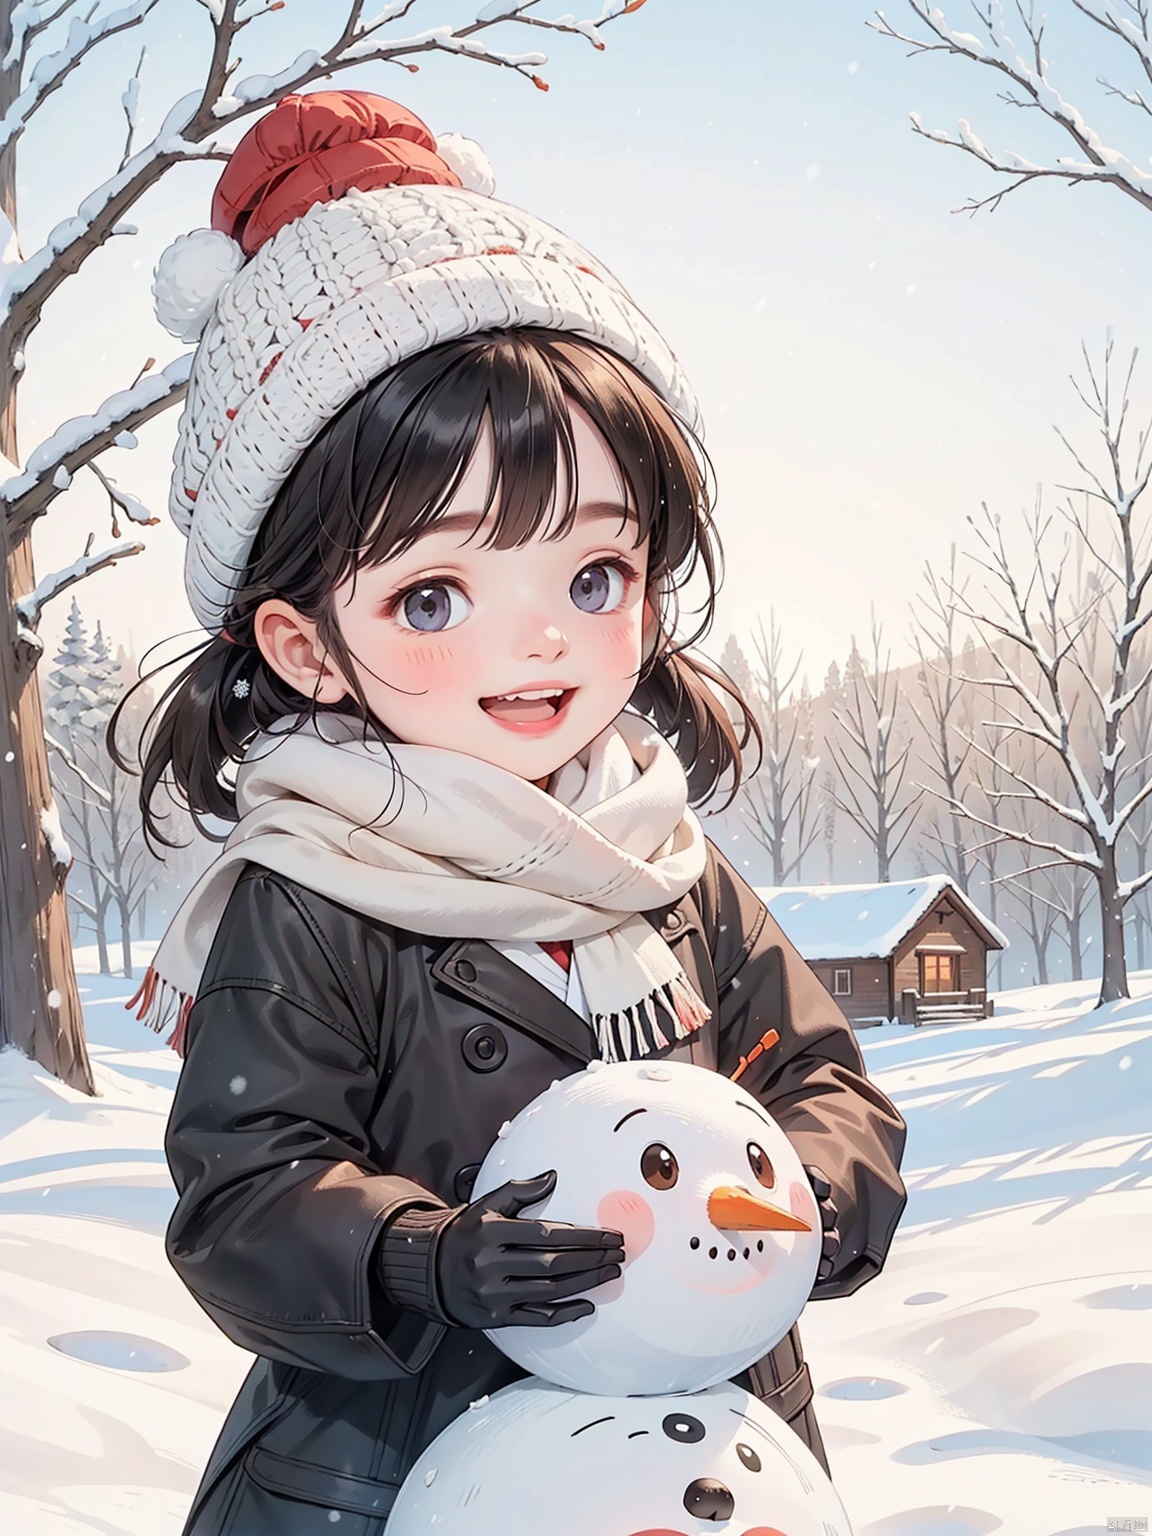 Children, warm winter sun, snowman, snowflakes, plush hat, plush scarf, slippery, fairy-tale snow scene, warm gloves, cheerful laughter, rosy little face, natural light, medium long shot (MLS)